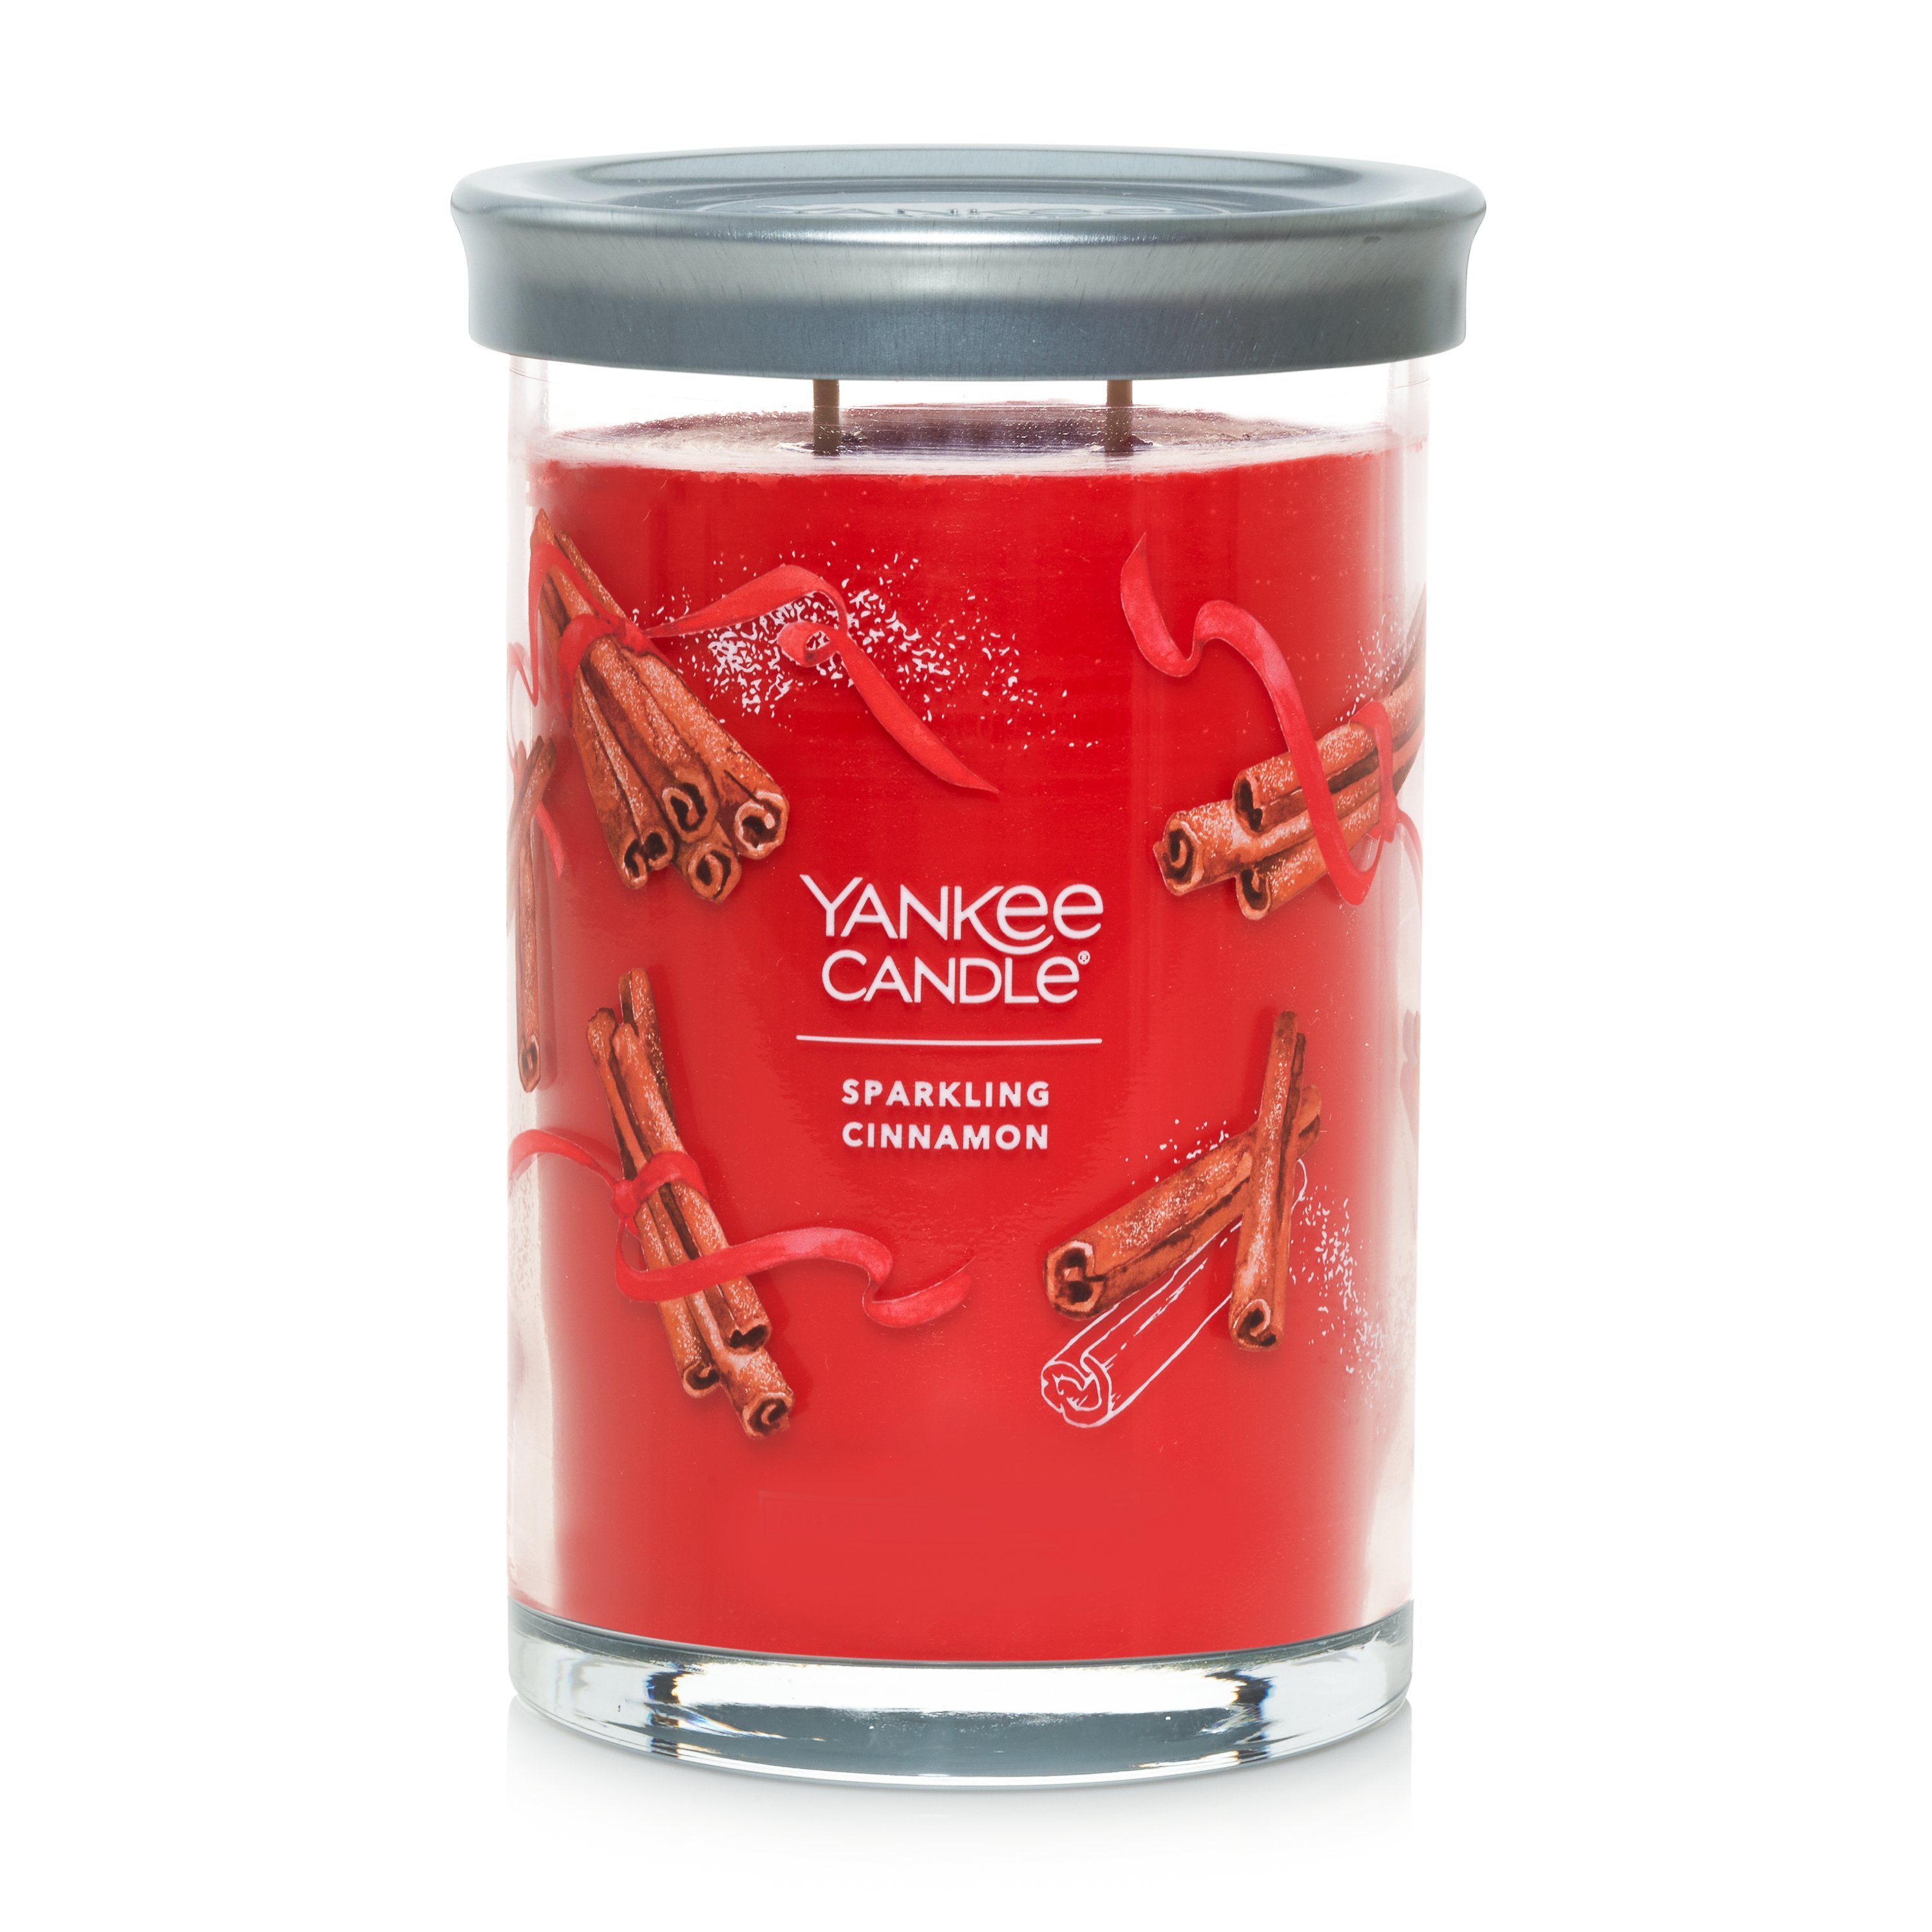 Sparkling Cinnamon 22 oz. Original Large Jar Candles - Large Jar